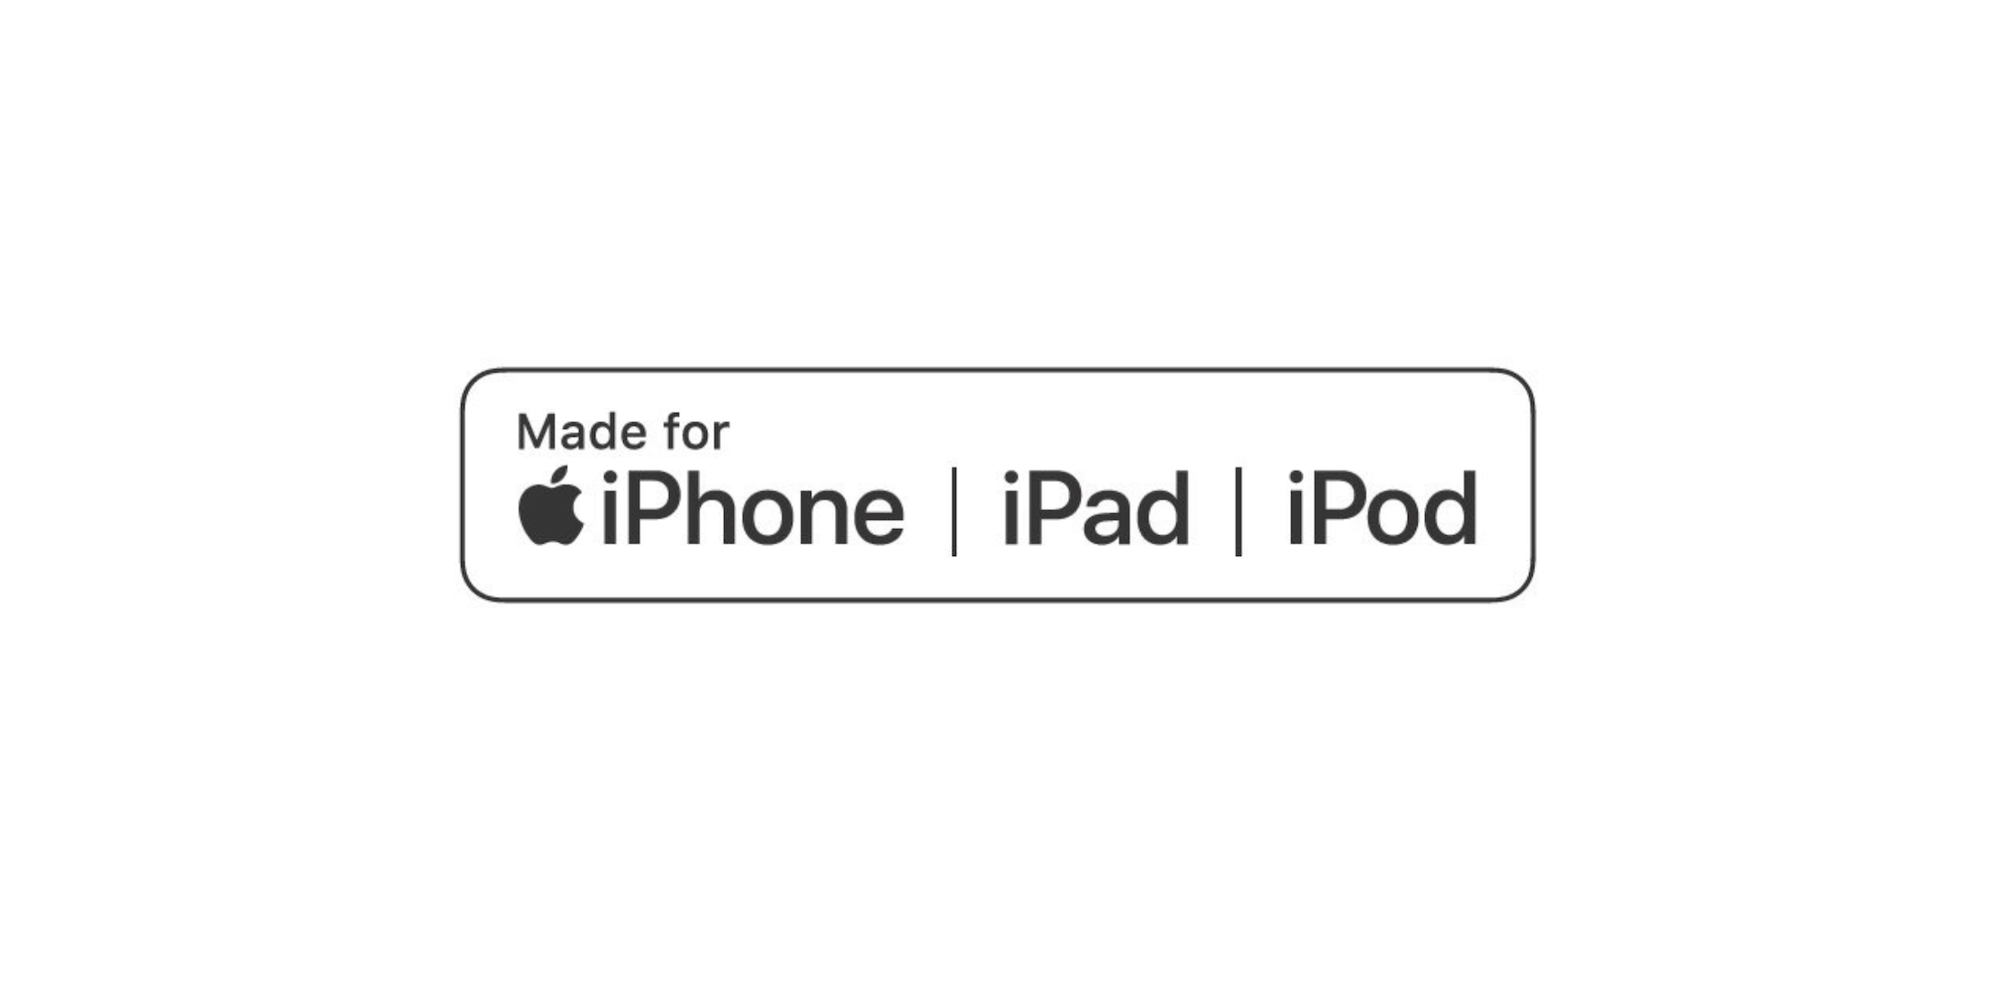 apple-mfi-logos-update-2018.png